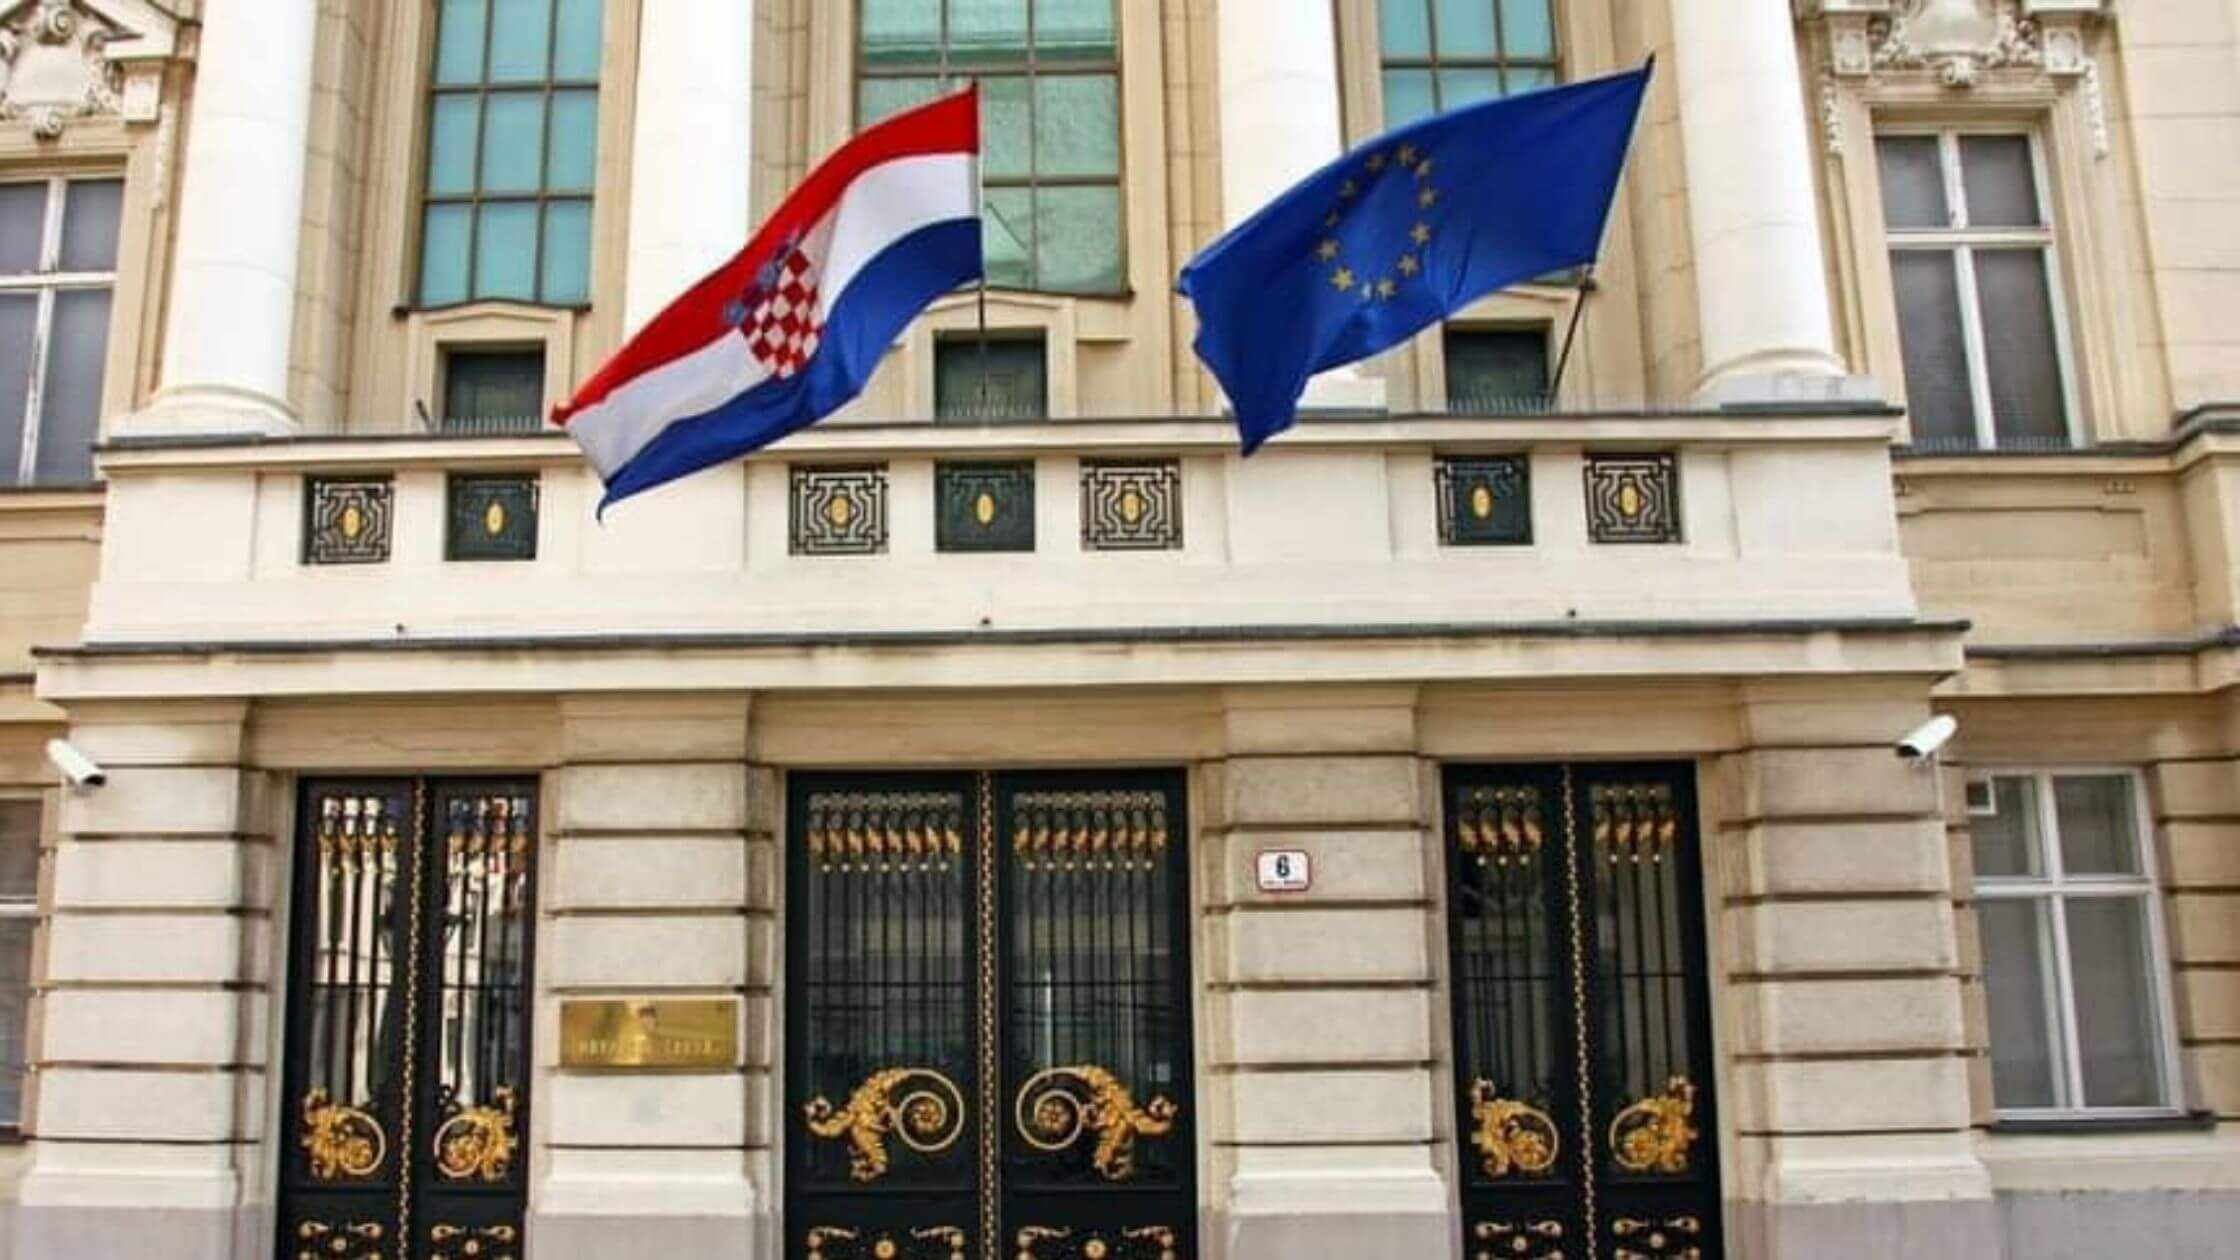 Image: Croatian Parliament Building/Facebook